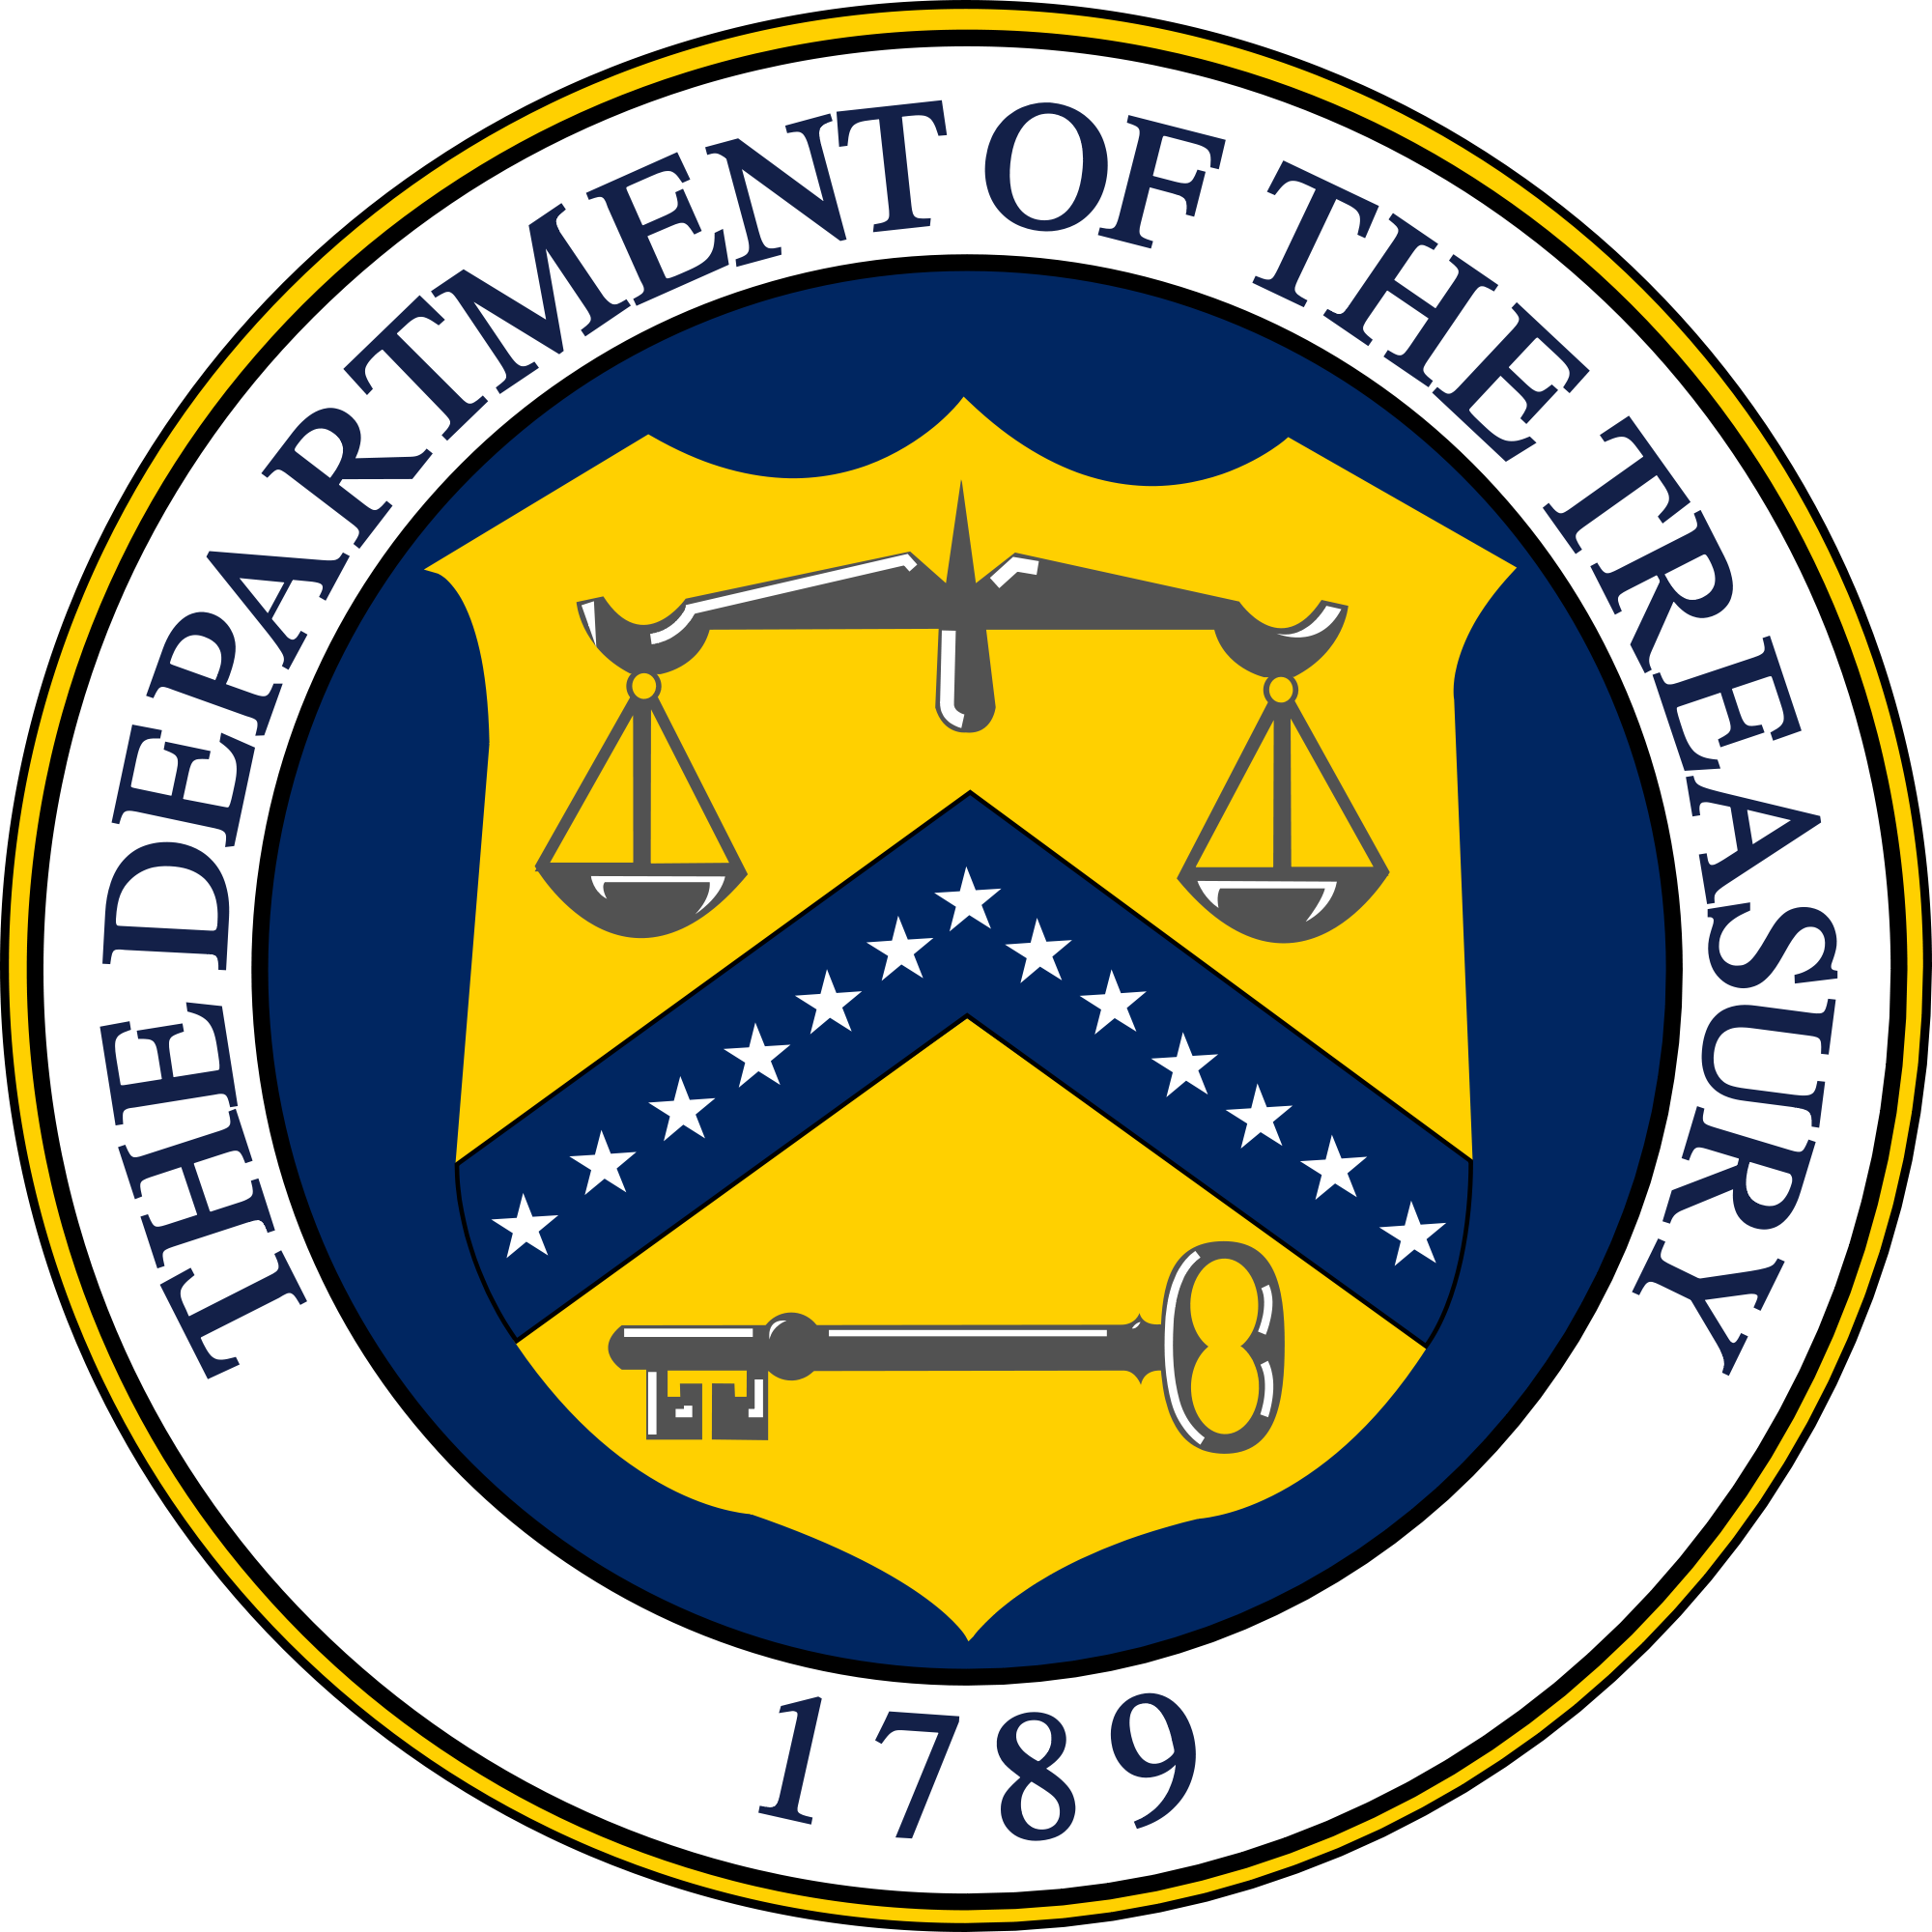 Department of the Treasury Logo